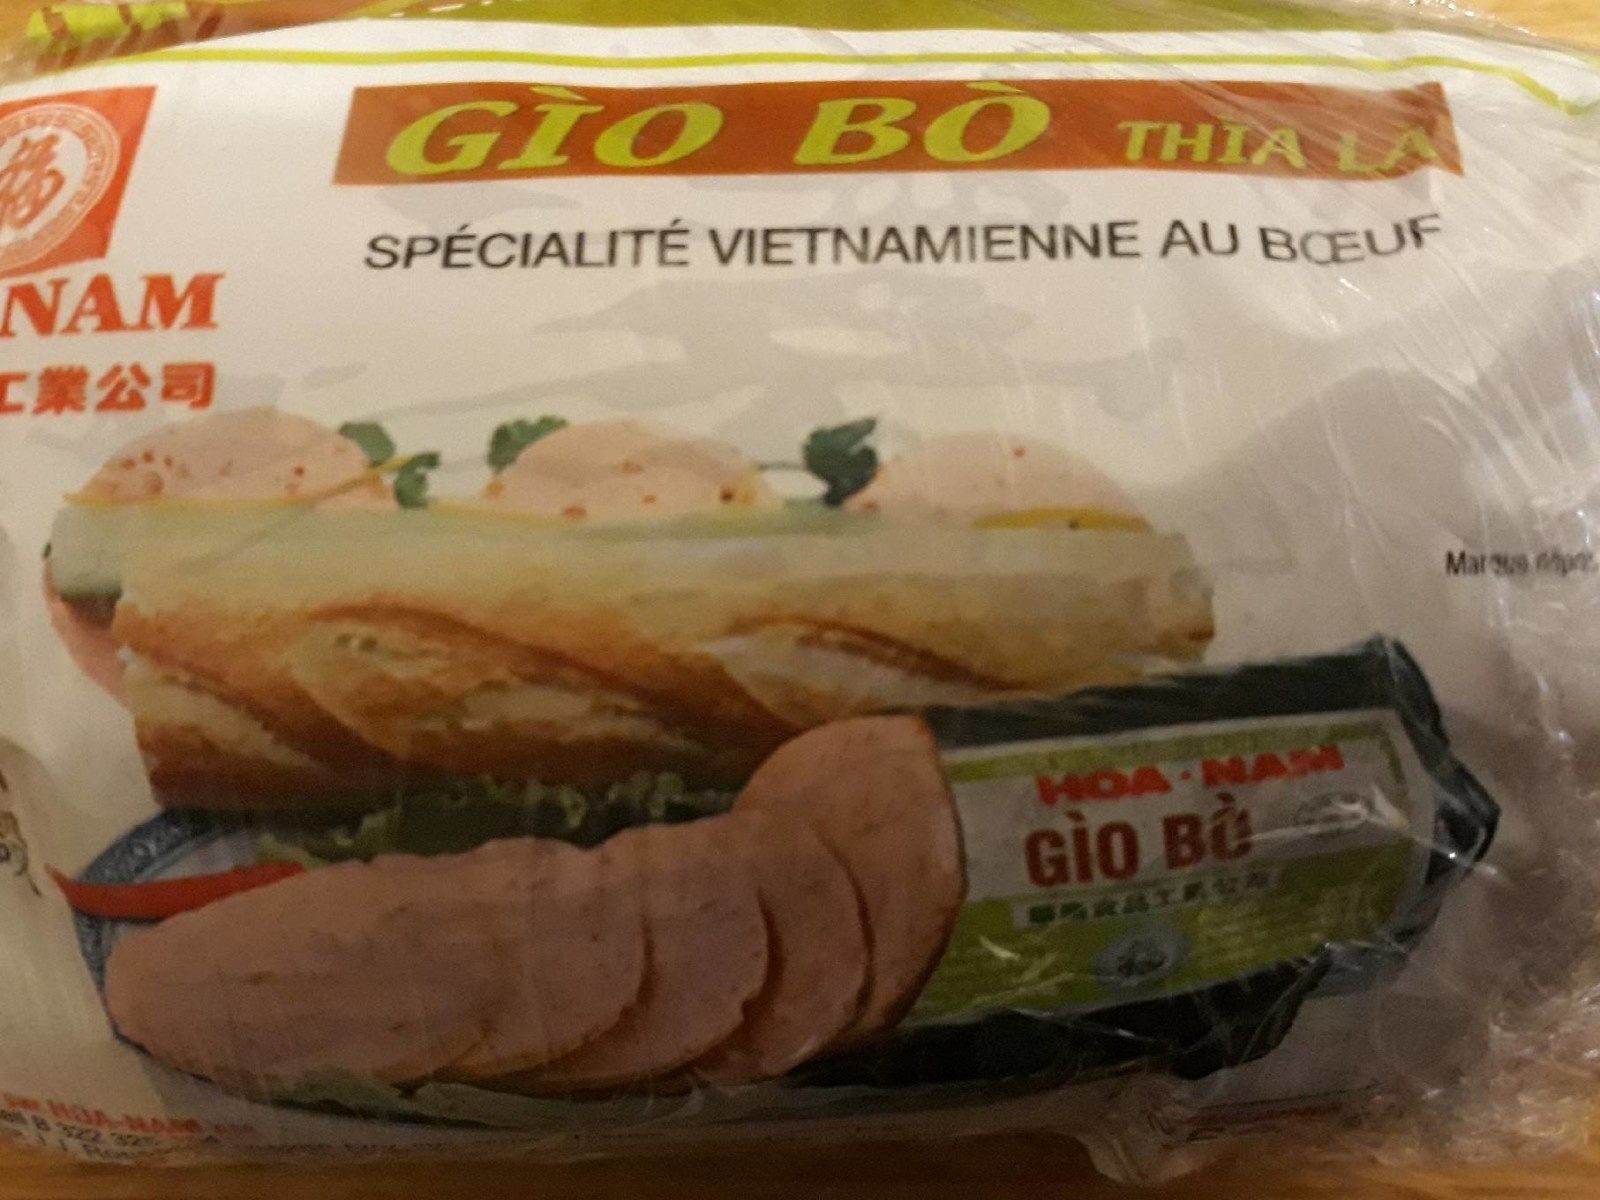 Gio Bo Thia La - Product - fr